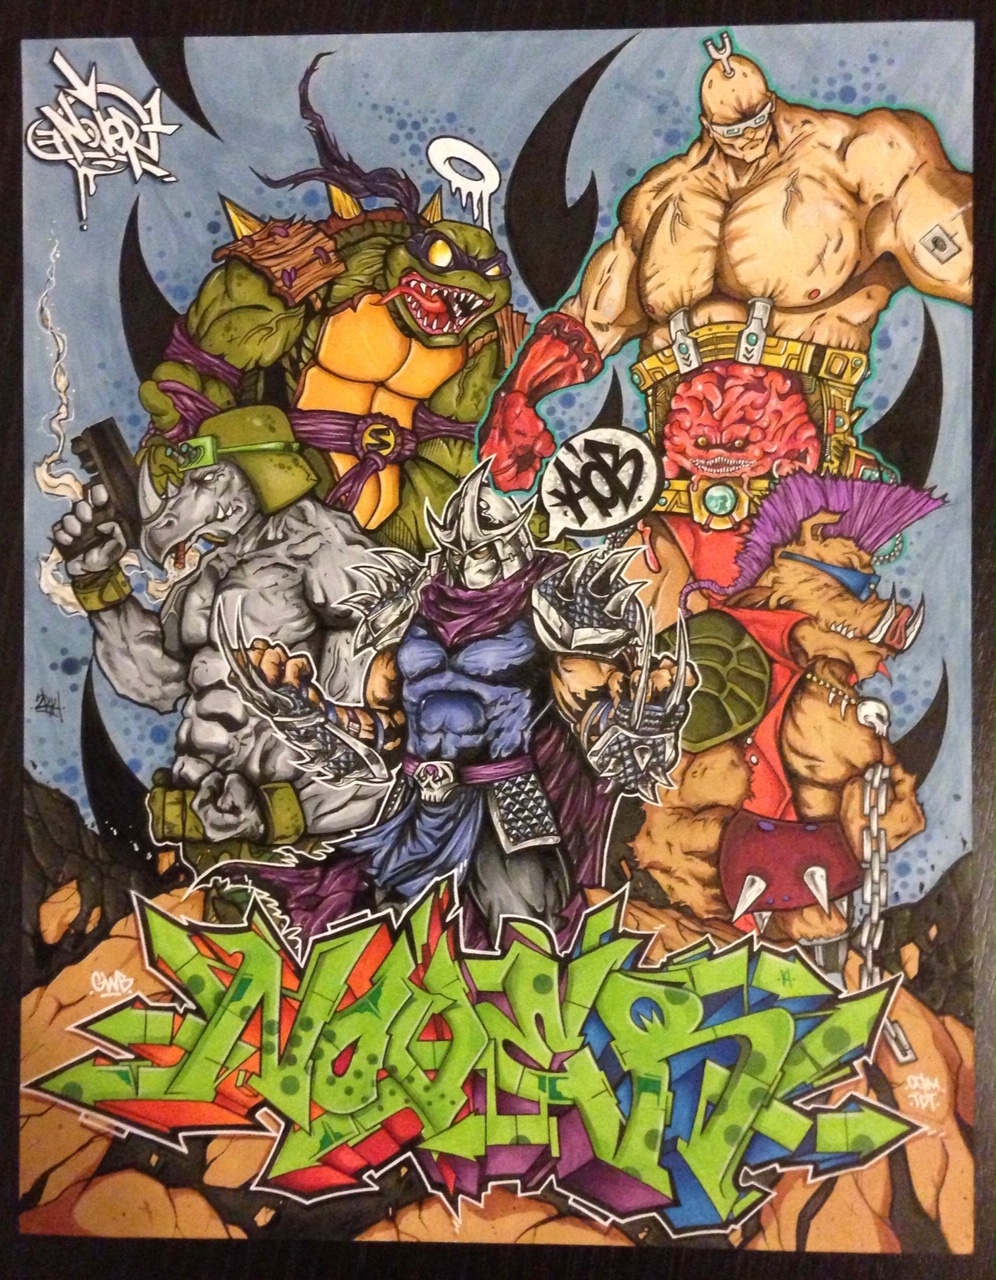 Teenage Mutant Ninja Turtles Villains by Nover, markers & pen on paper, 2014.